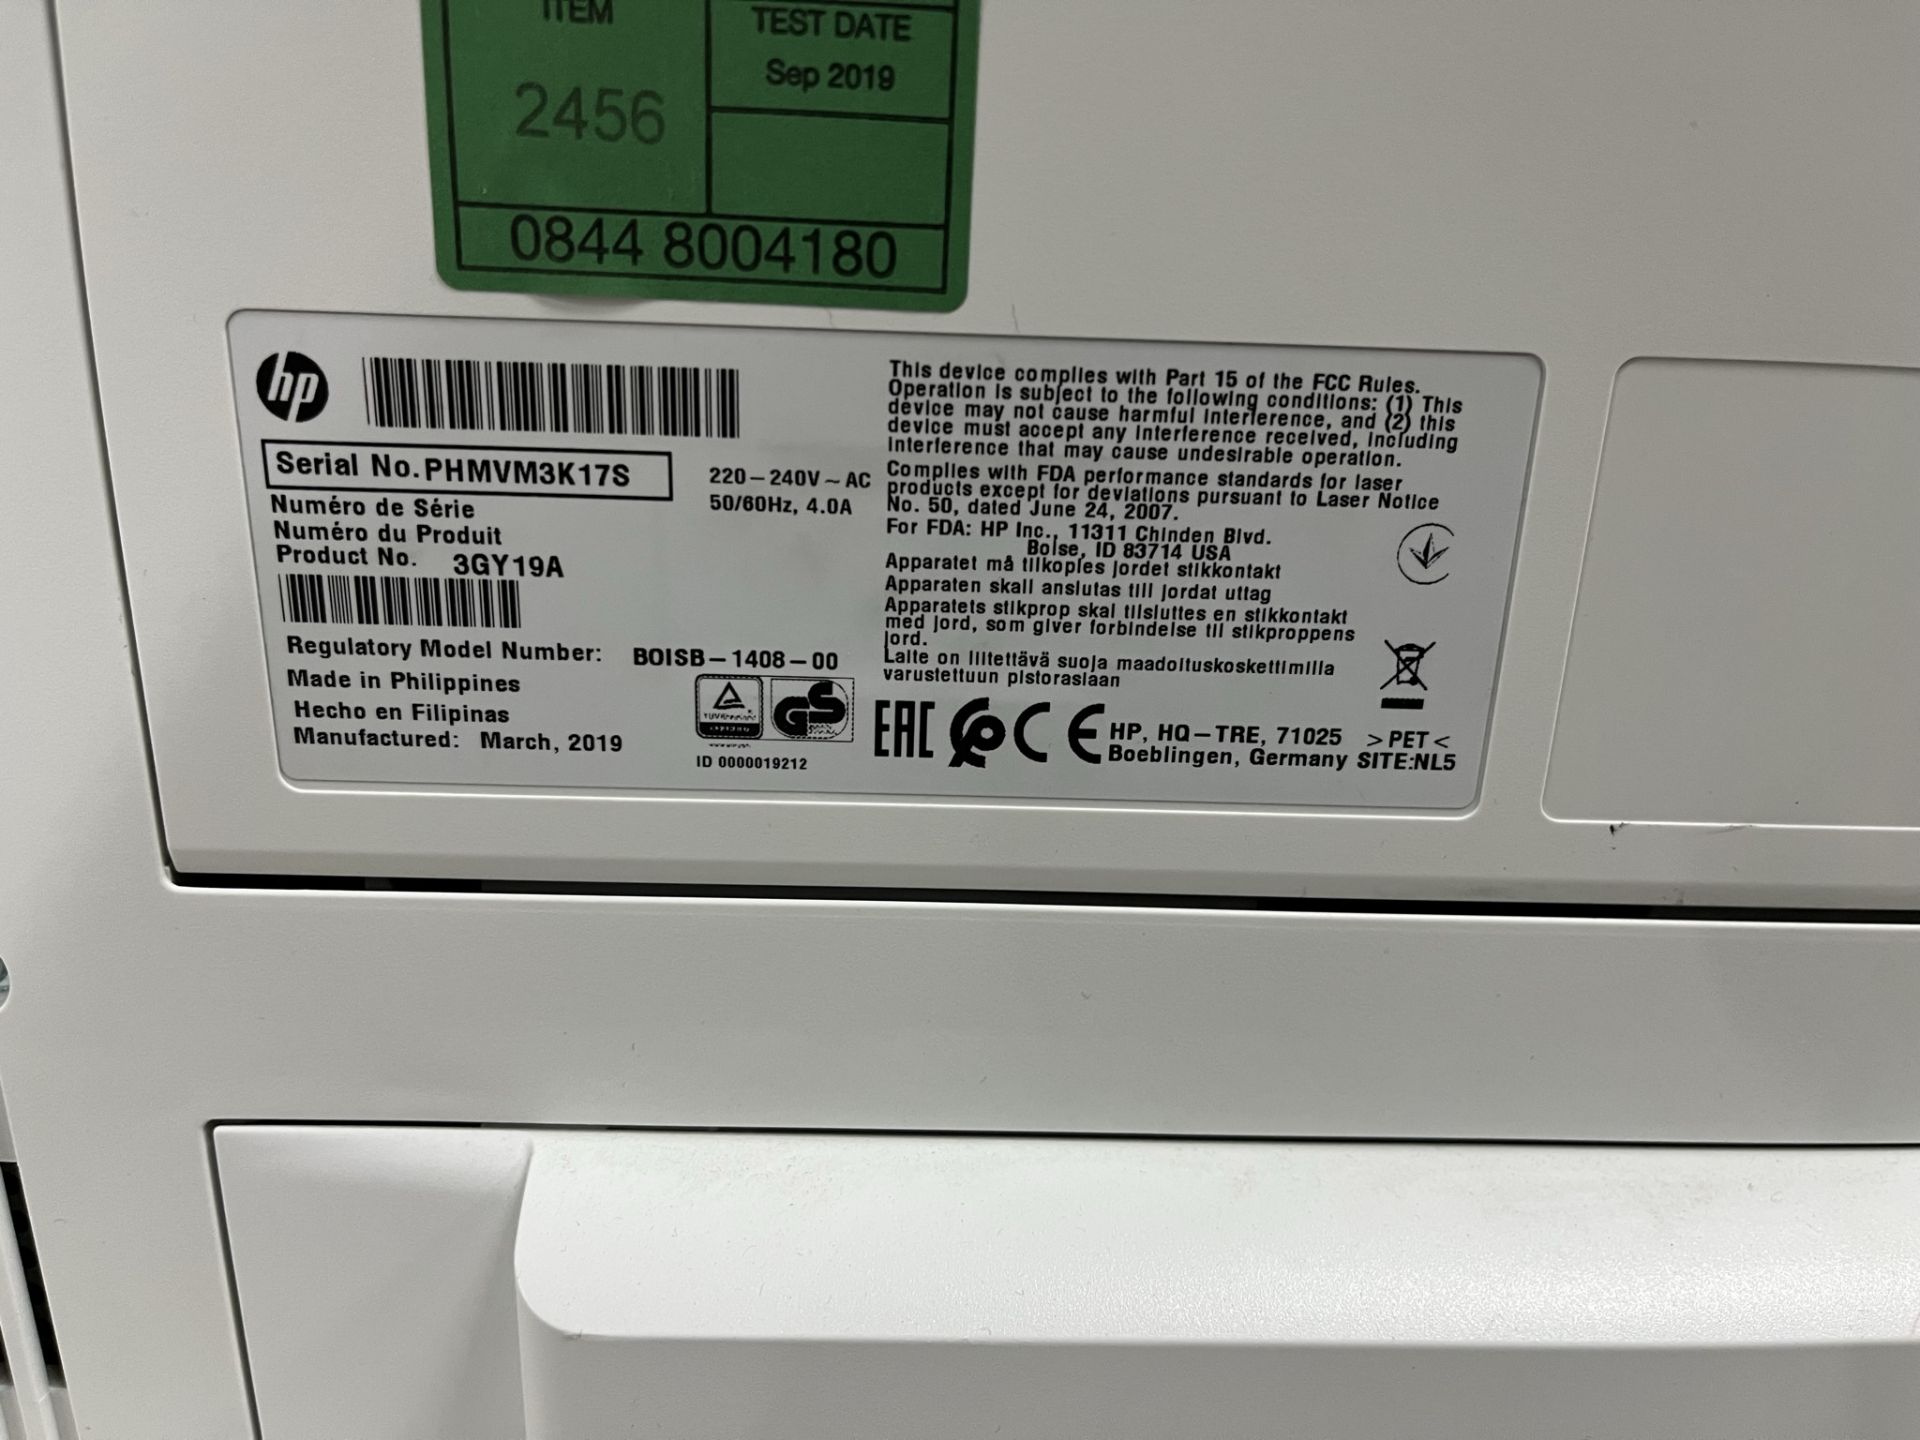 HP BOISB-1408-00 Multifunction Printer - Image 12 of 12